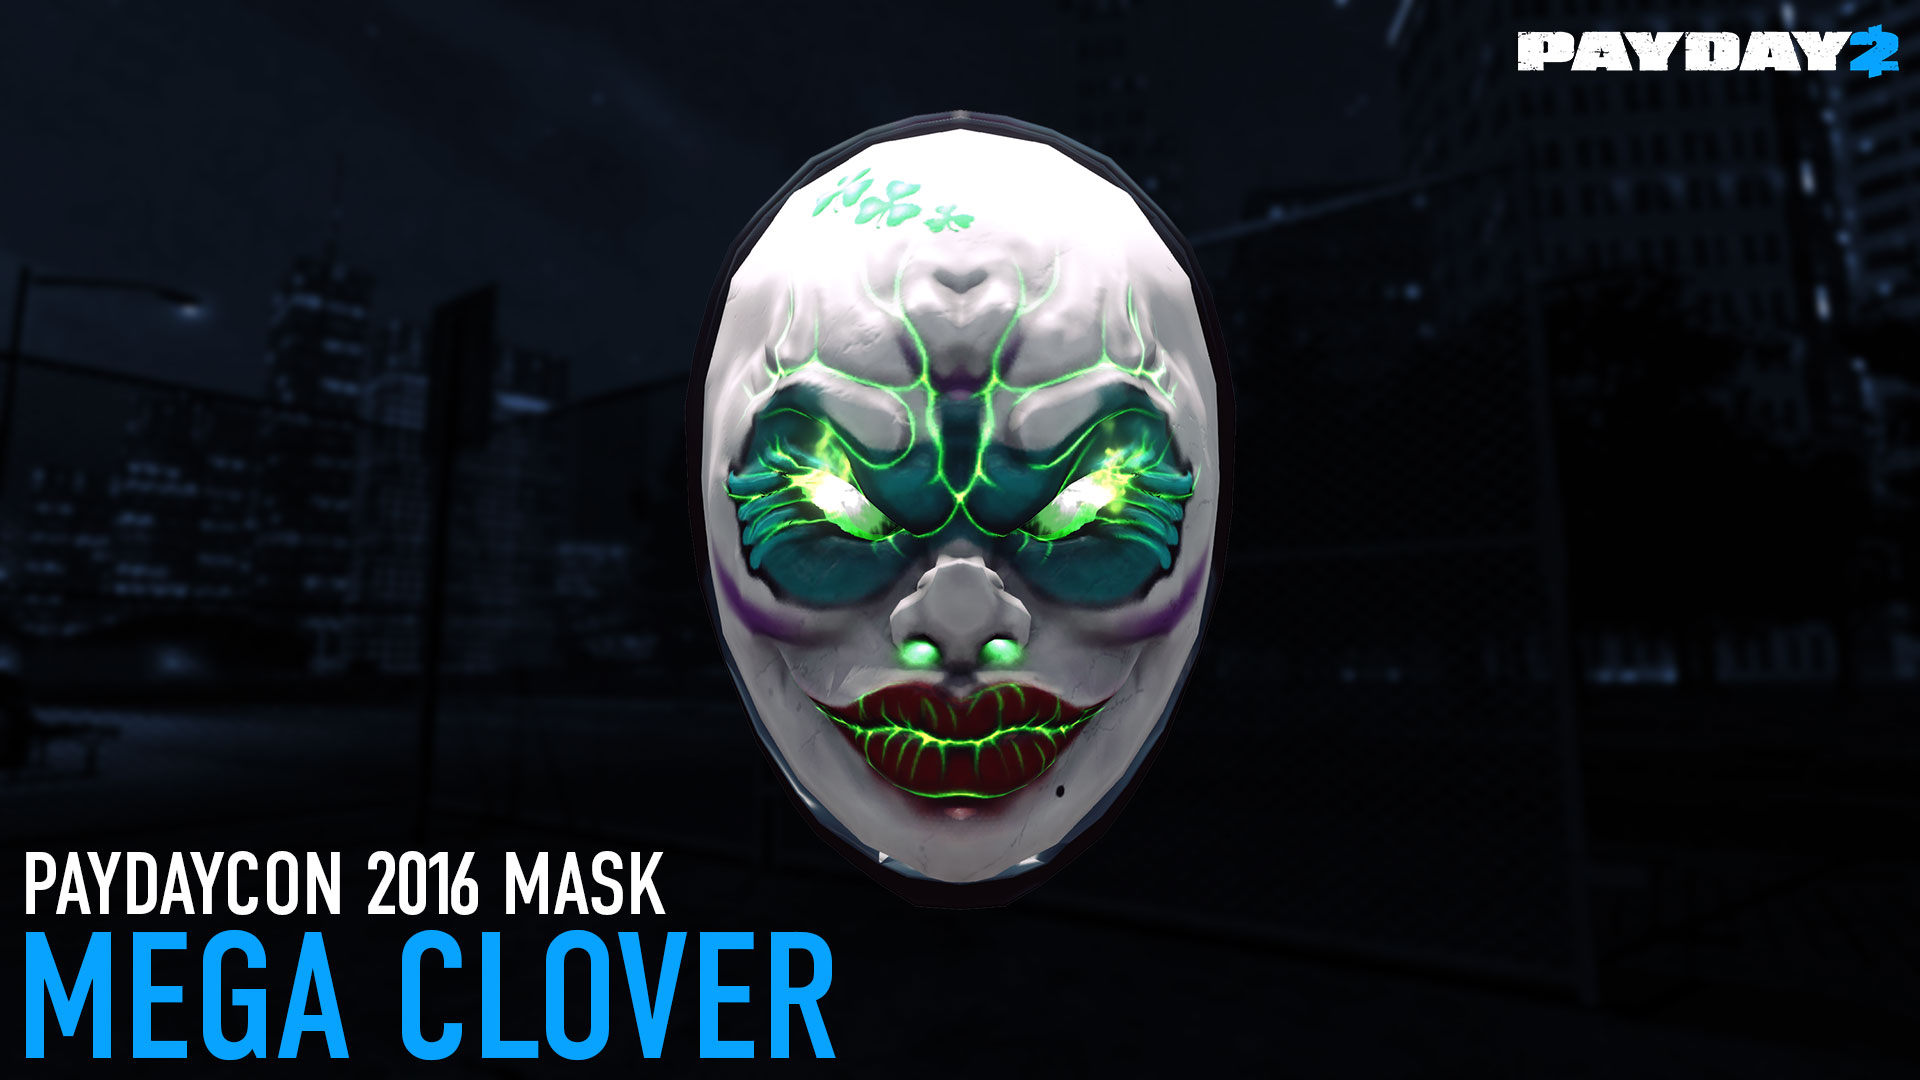 PAYDAY 2 - Mega Clover Mask (PAYDAYCON 2016) DLC Steam CD Key, $5.64